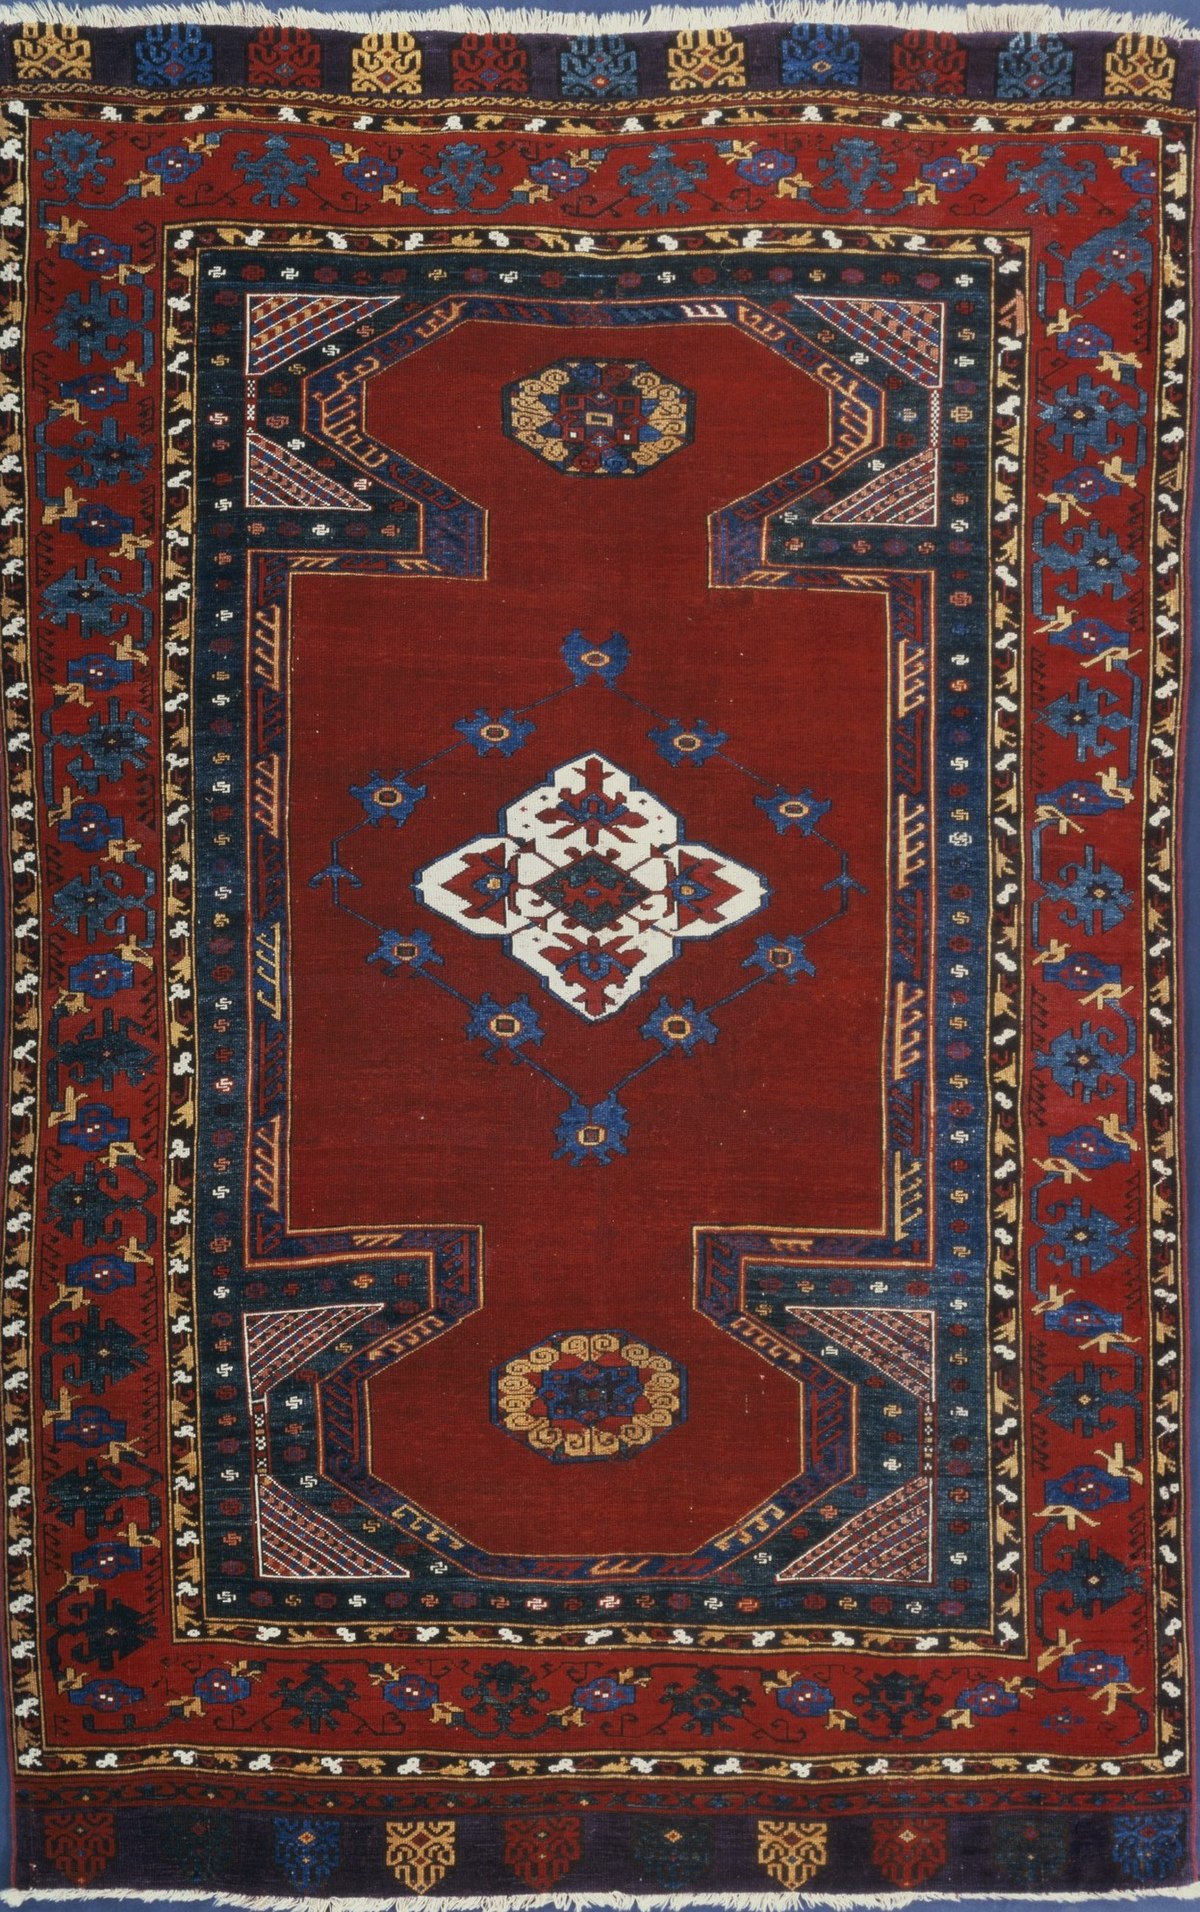 Anatolian rug - Wikipedia